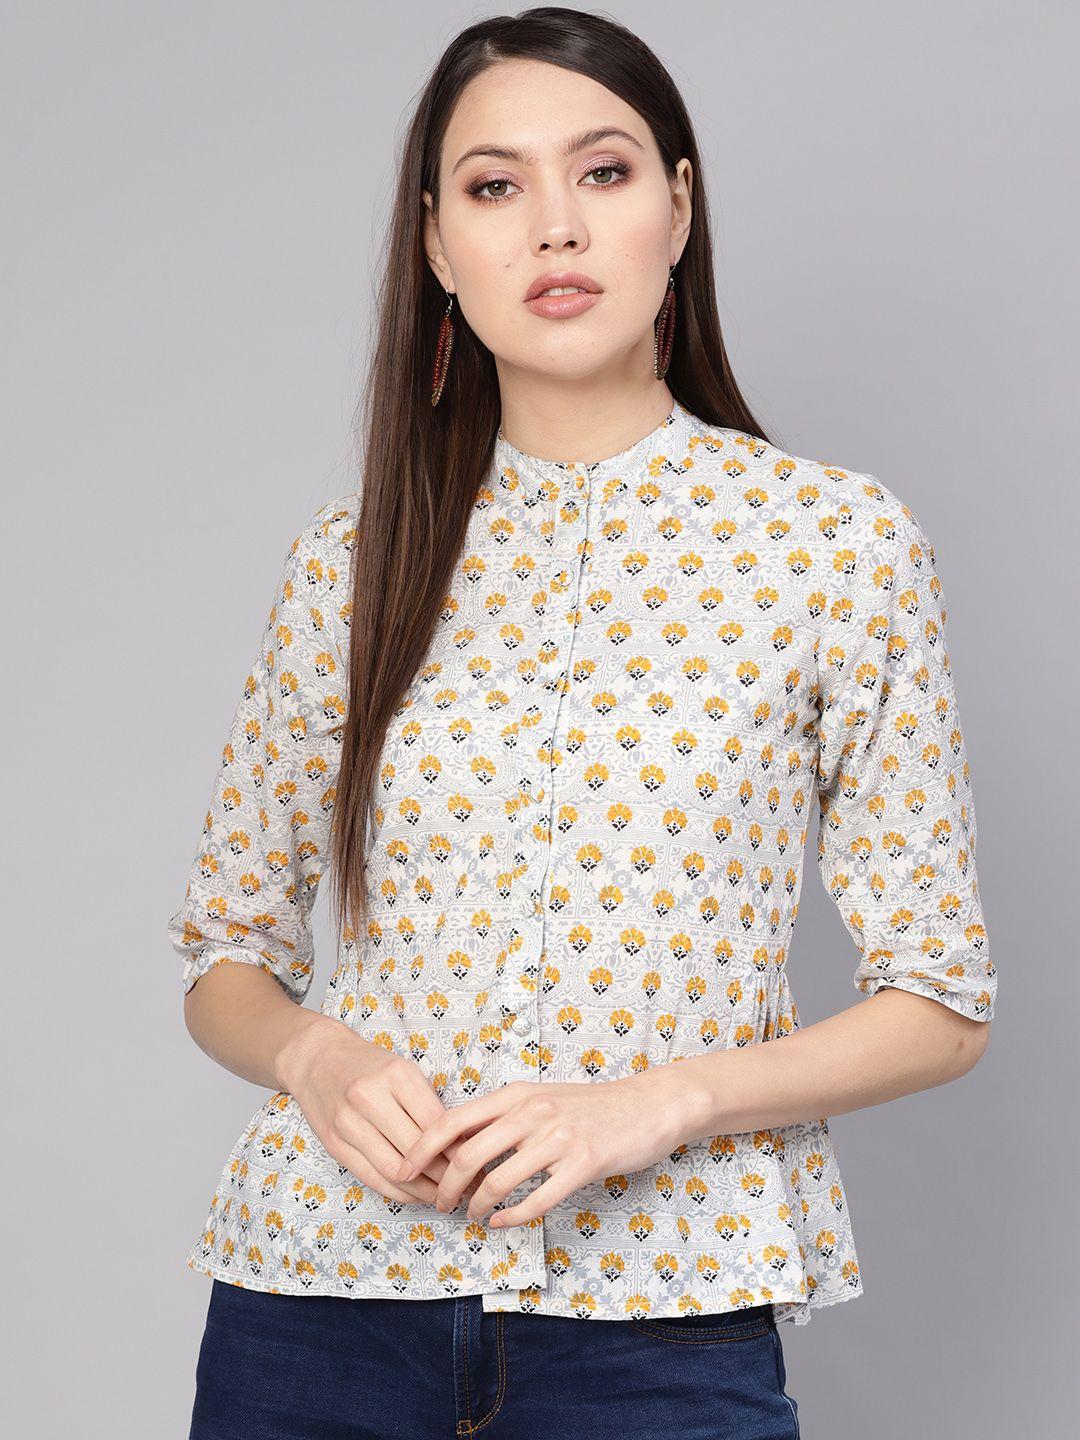 nayo women blue & mustard yellow printed pure cotton shirt style pure cotton top